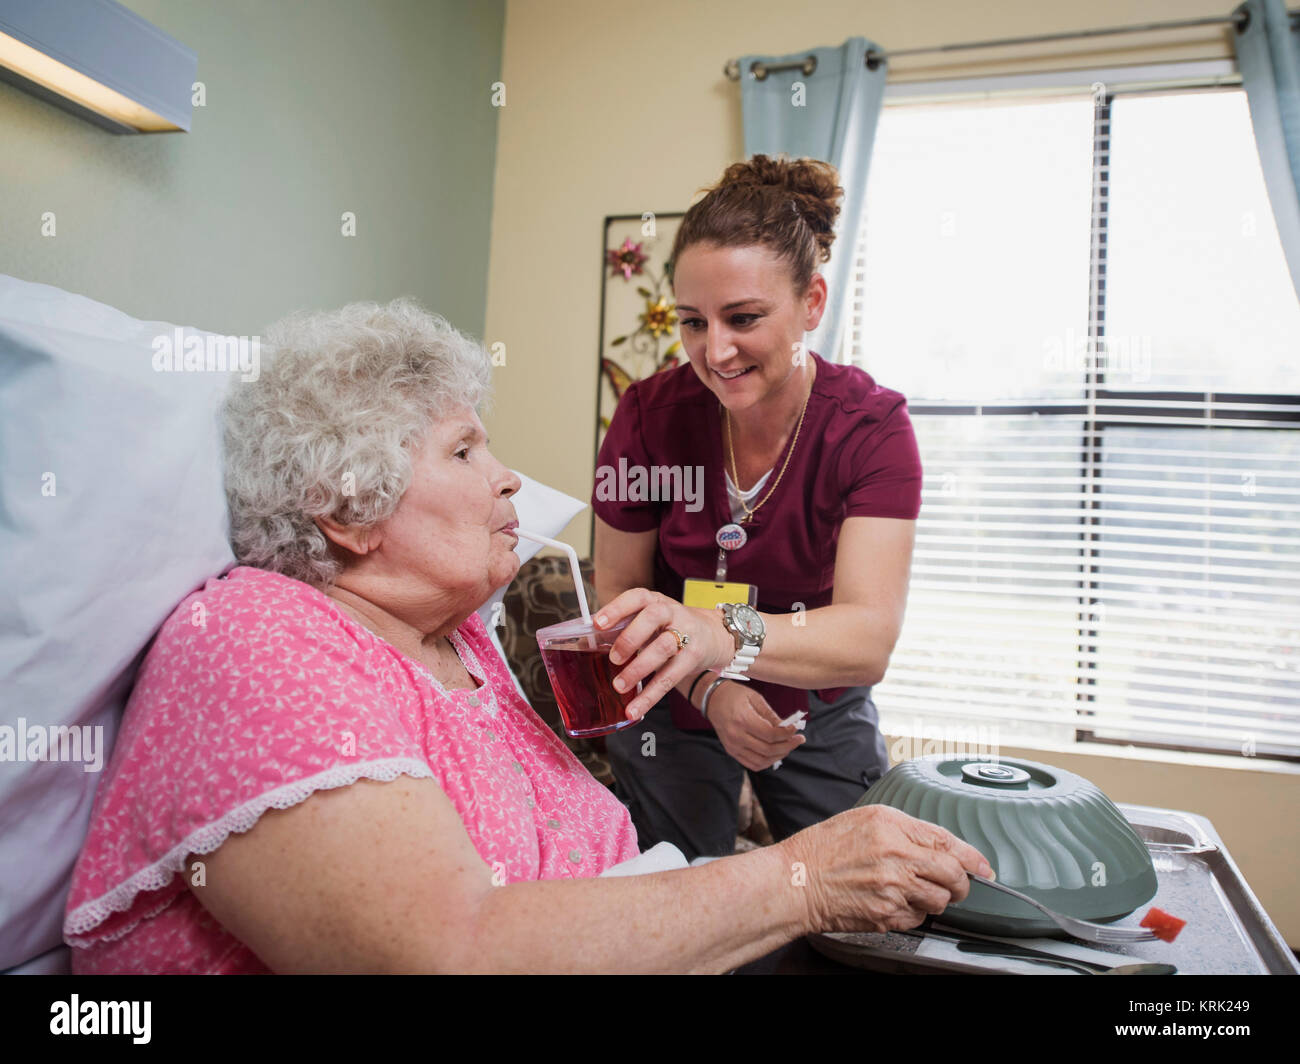 Caucasian nurse feeding patient in hospital bed Stock Photo